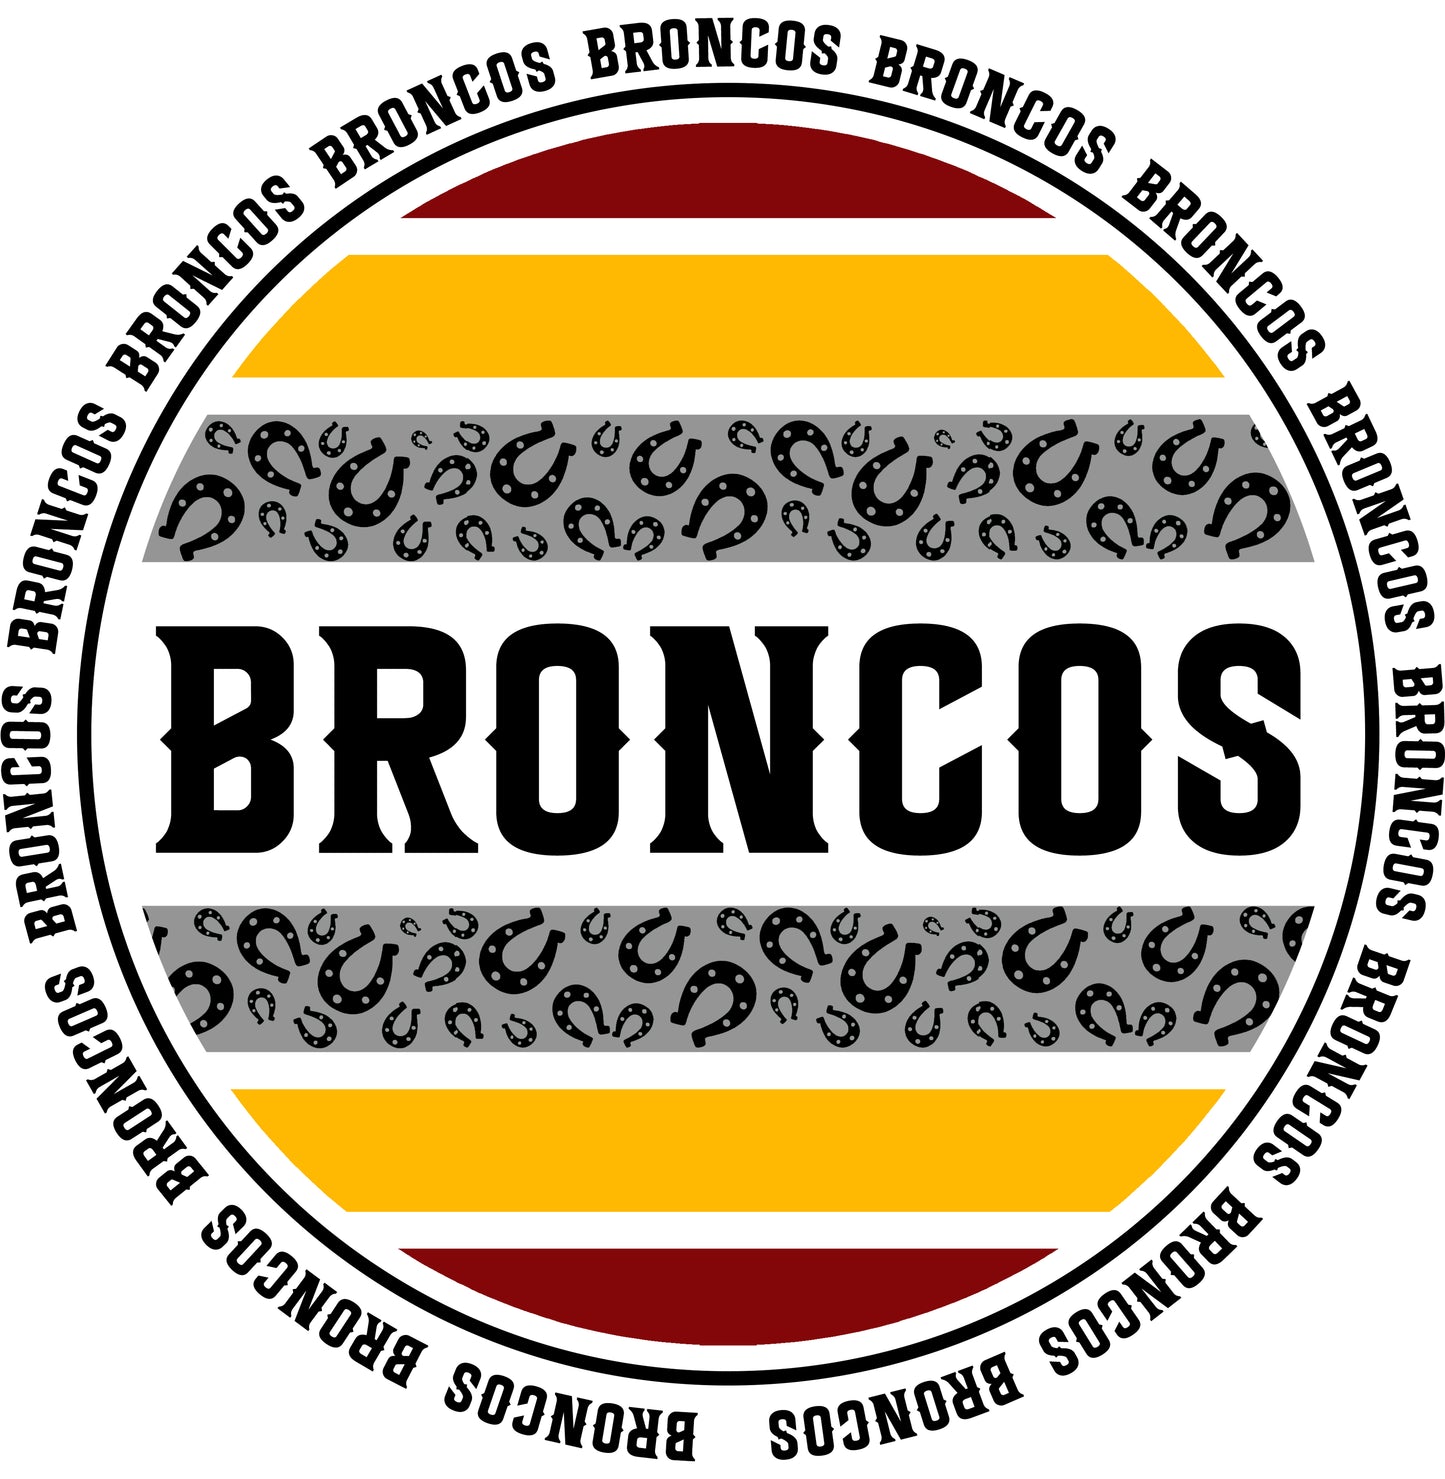 Broncos Spirit